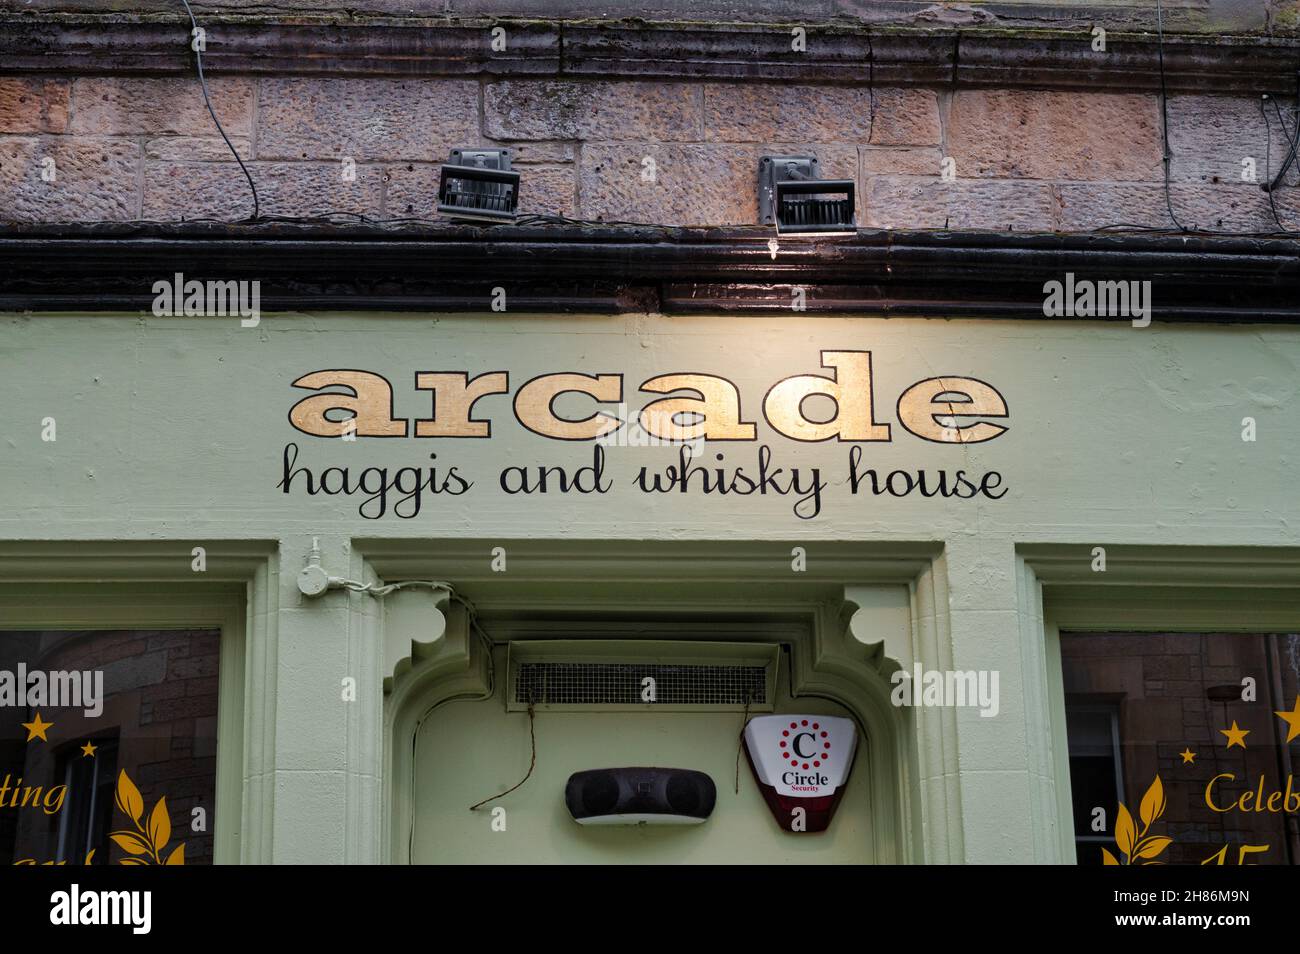 Edinburgh, Scotland- Nov 20, 2021: The sign for Arcade Bar Haggis & Whisky House in Edinburgh. Stock Photo